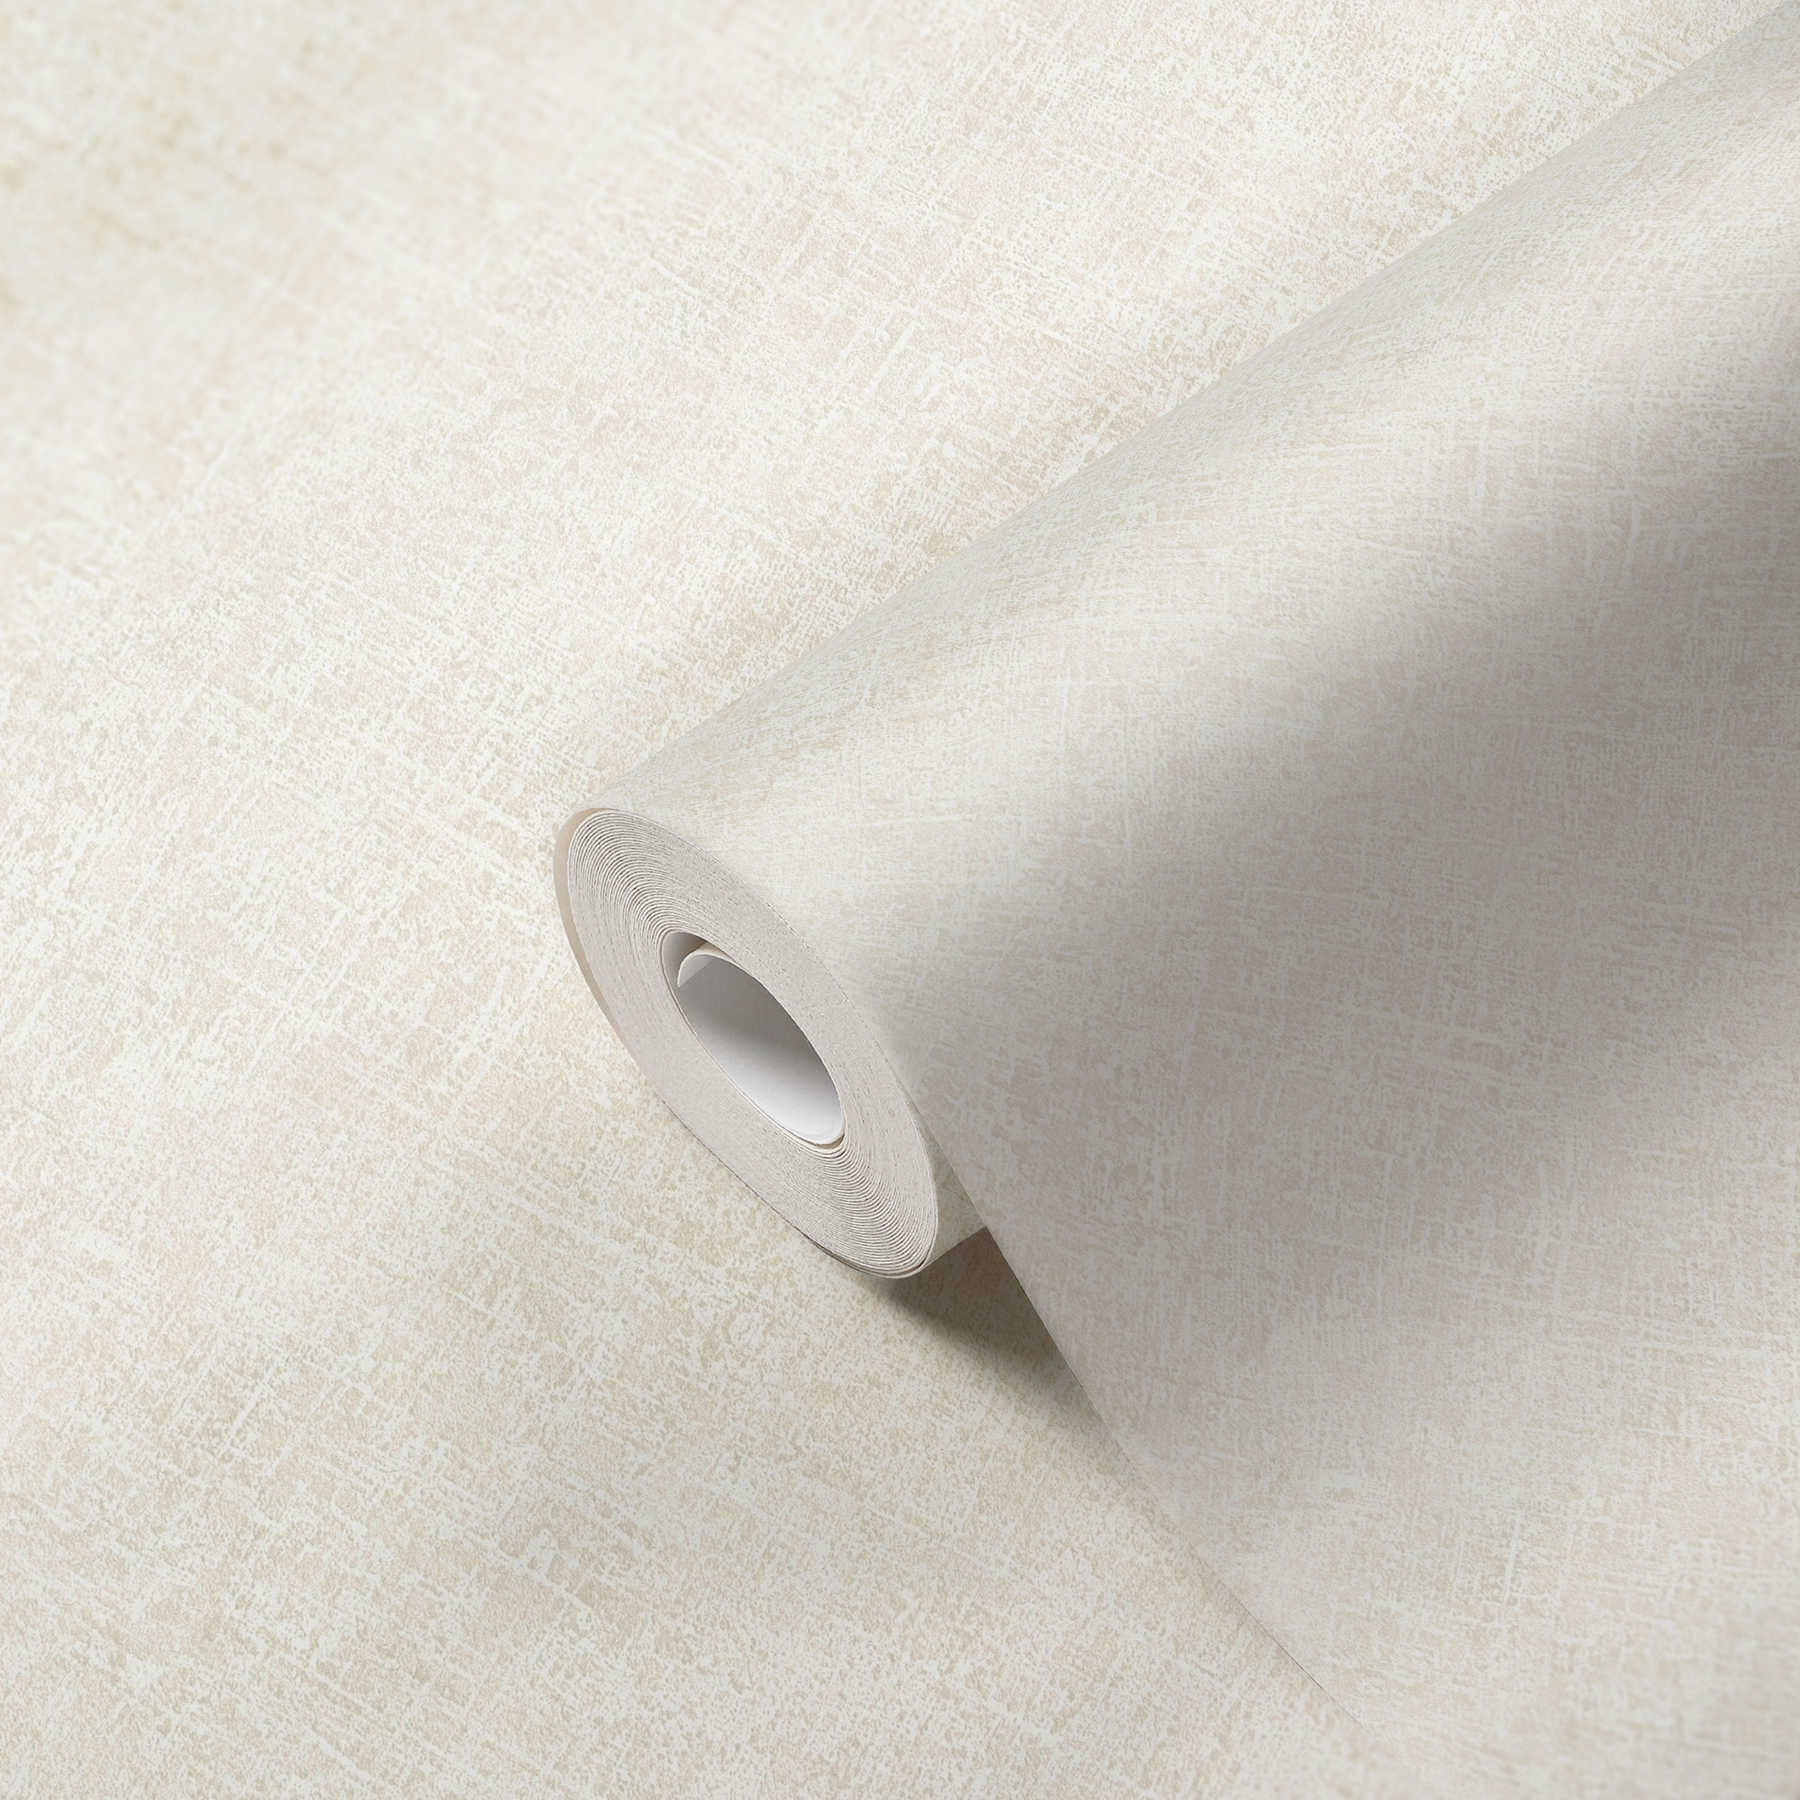             Stone optics wallpaper cream plain with chalk stone optics
        